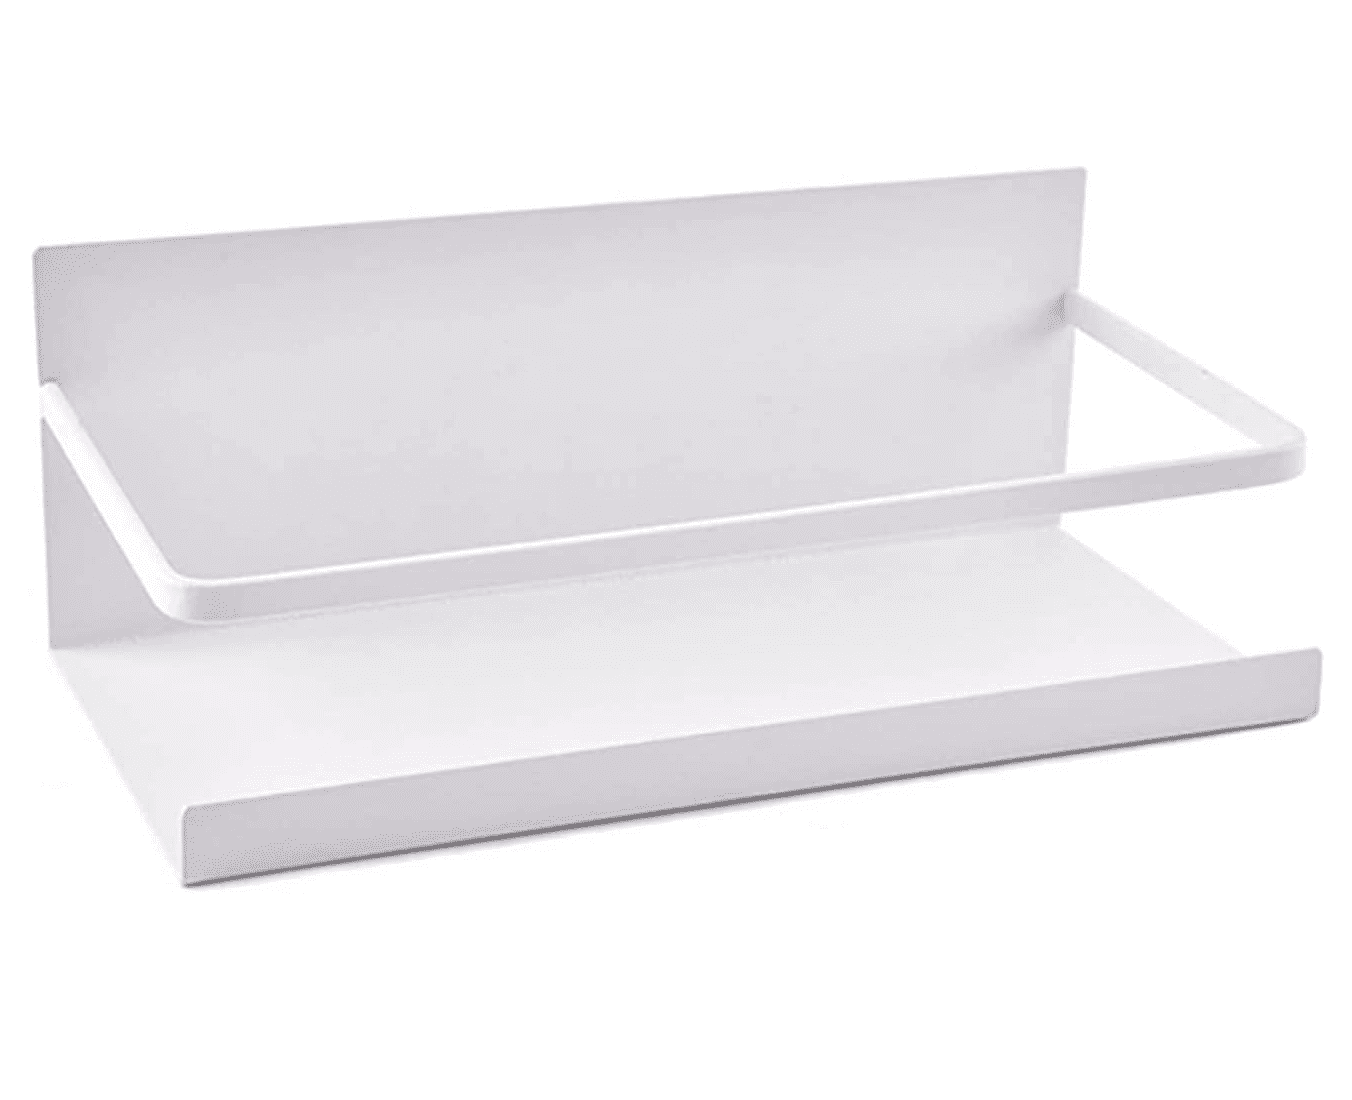 Suprima Magnetic Fridge Organizer Shelves - White